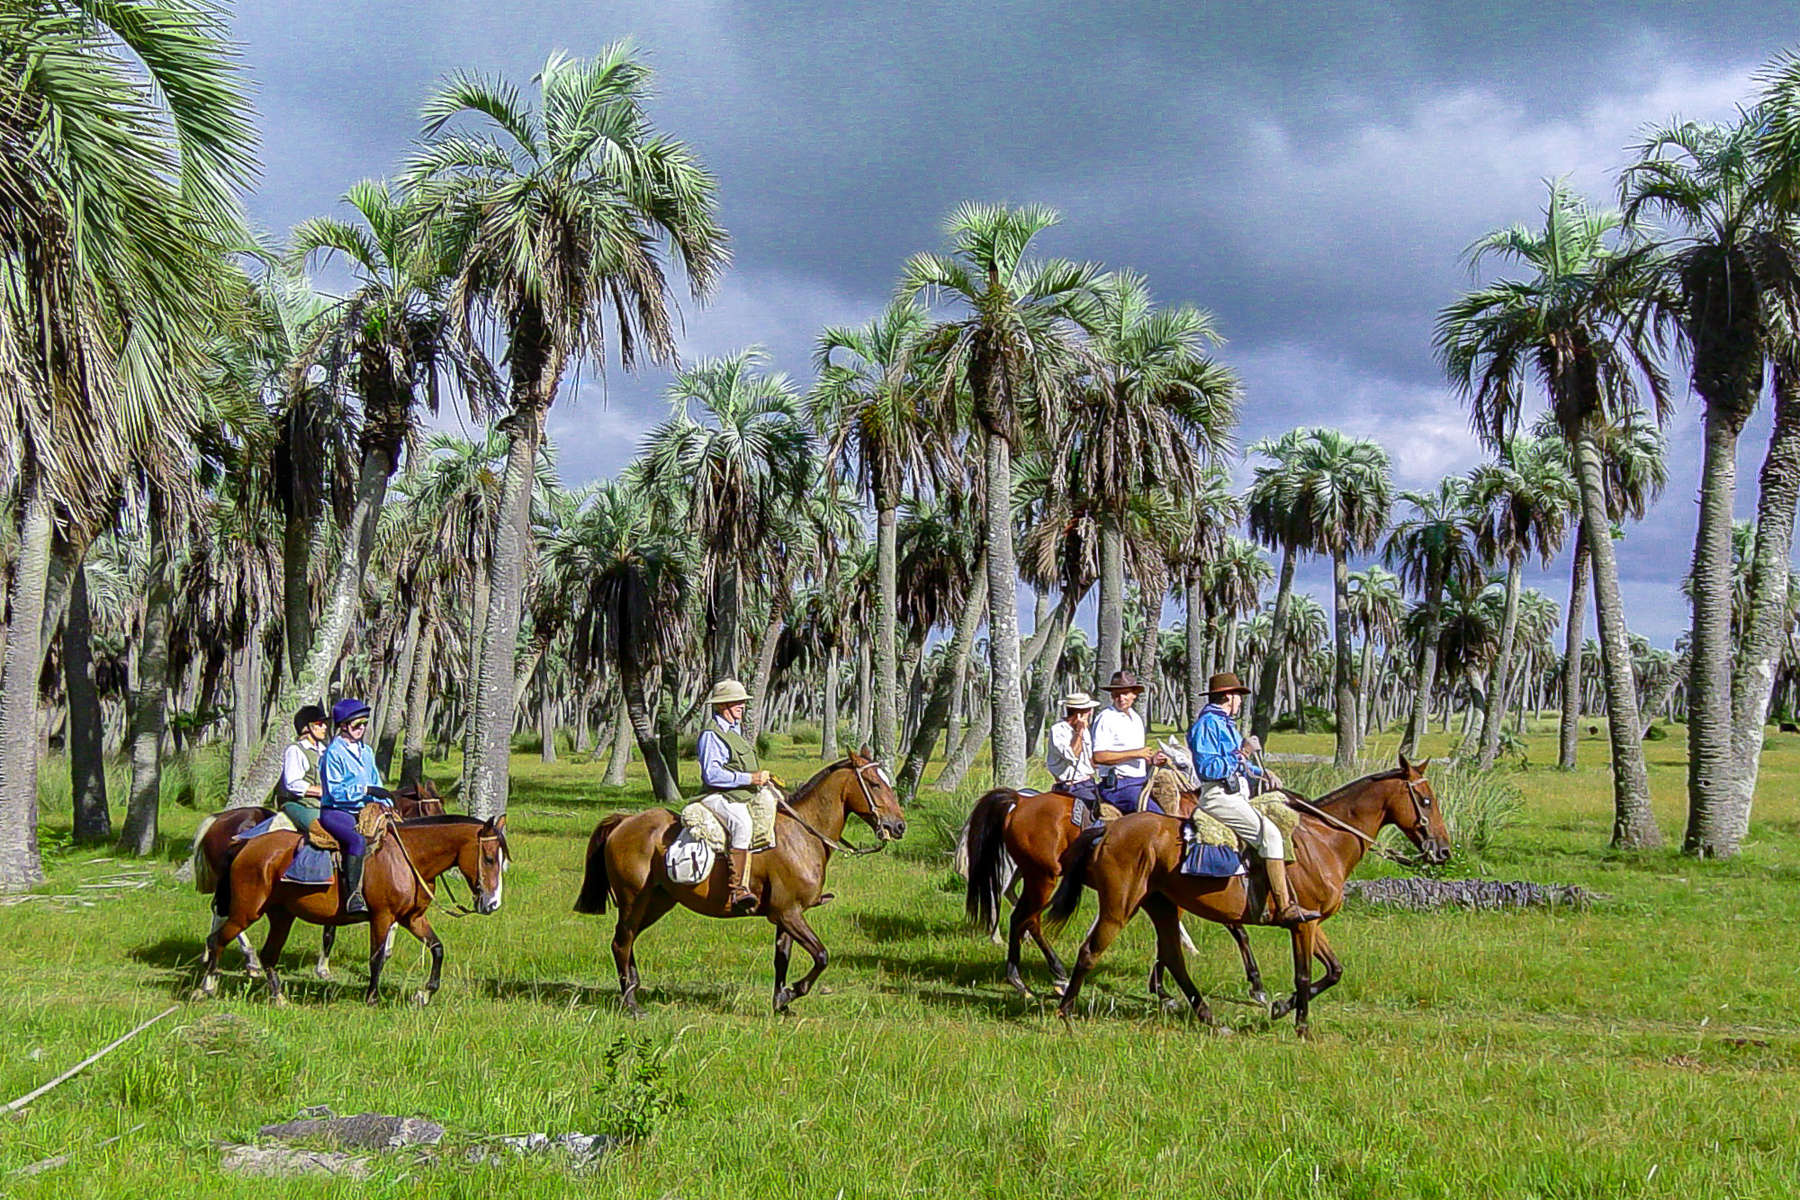 Trail riding on Criollo horses in Uruguay